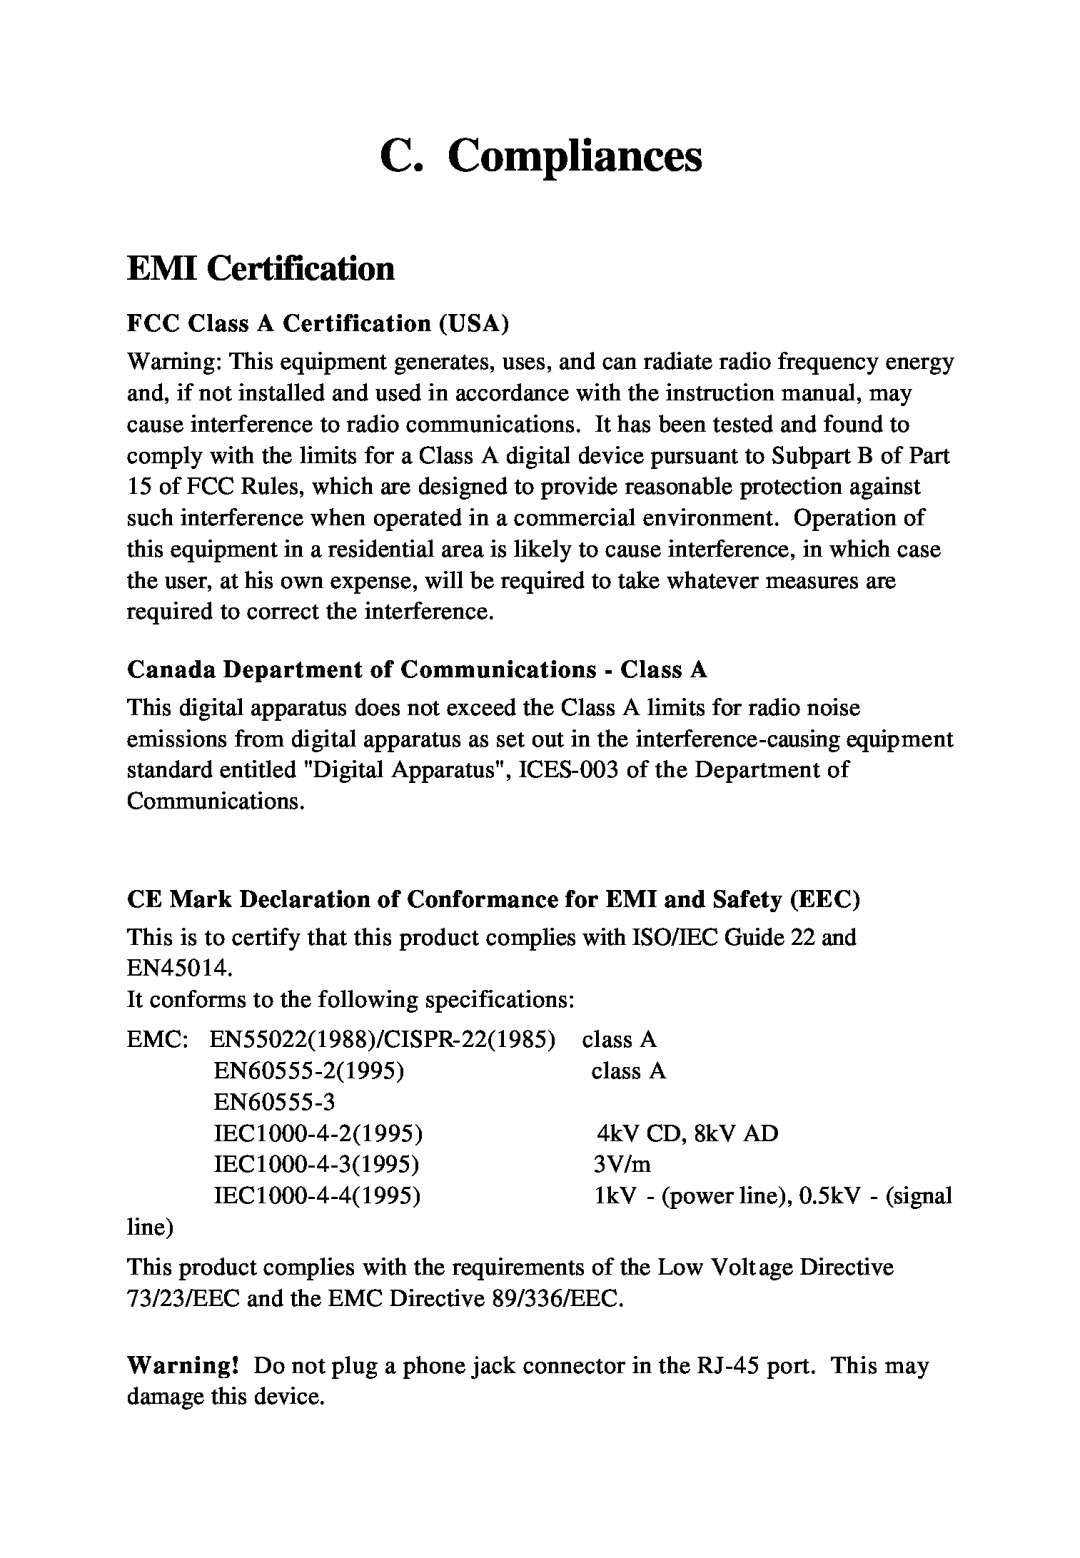 KTI Networks KS-324F manual C. Compliances, EMI Certification 